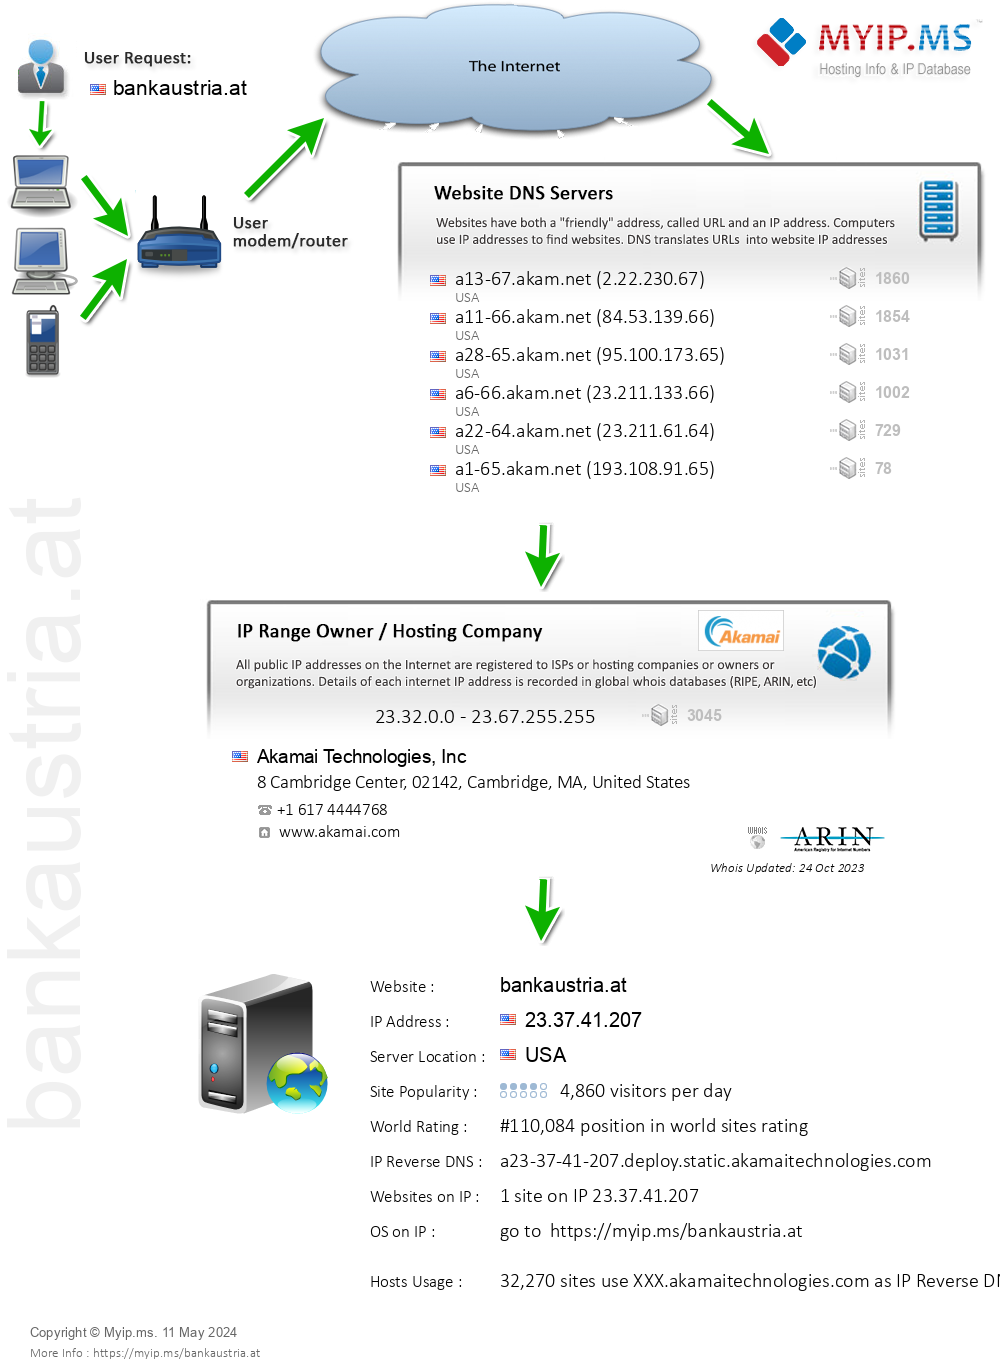 Bankaustria.at - Website Hosting Visual IP Diagram